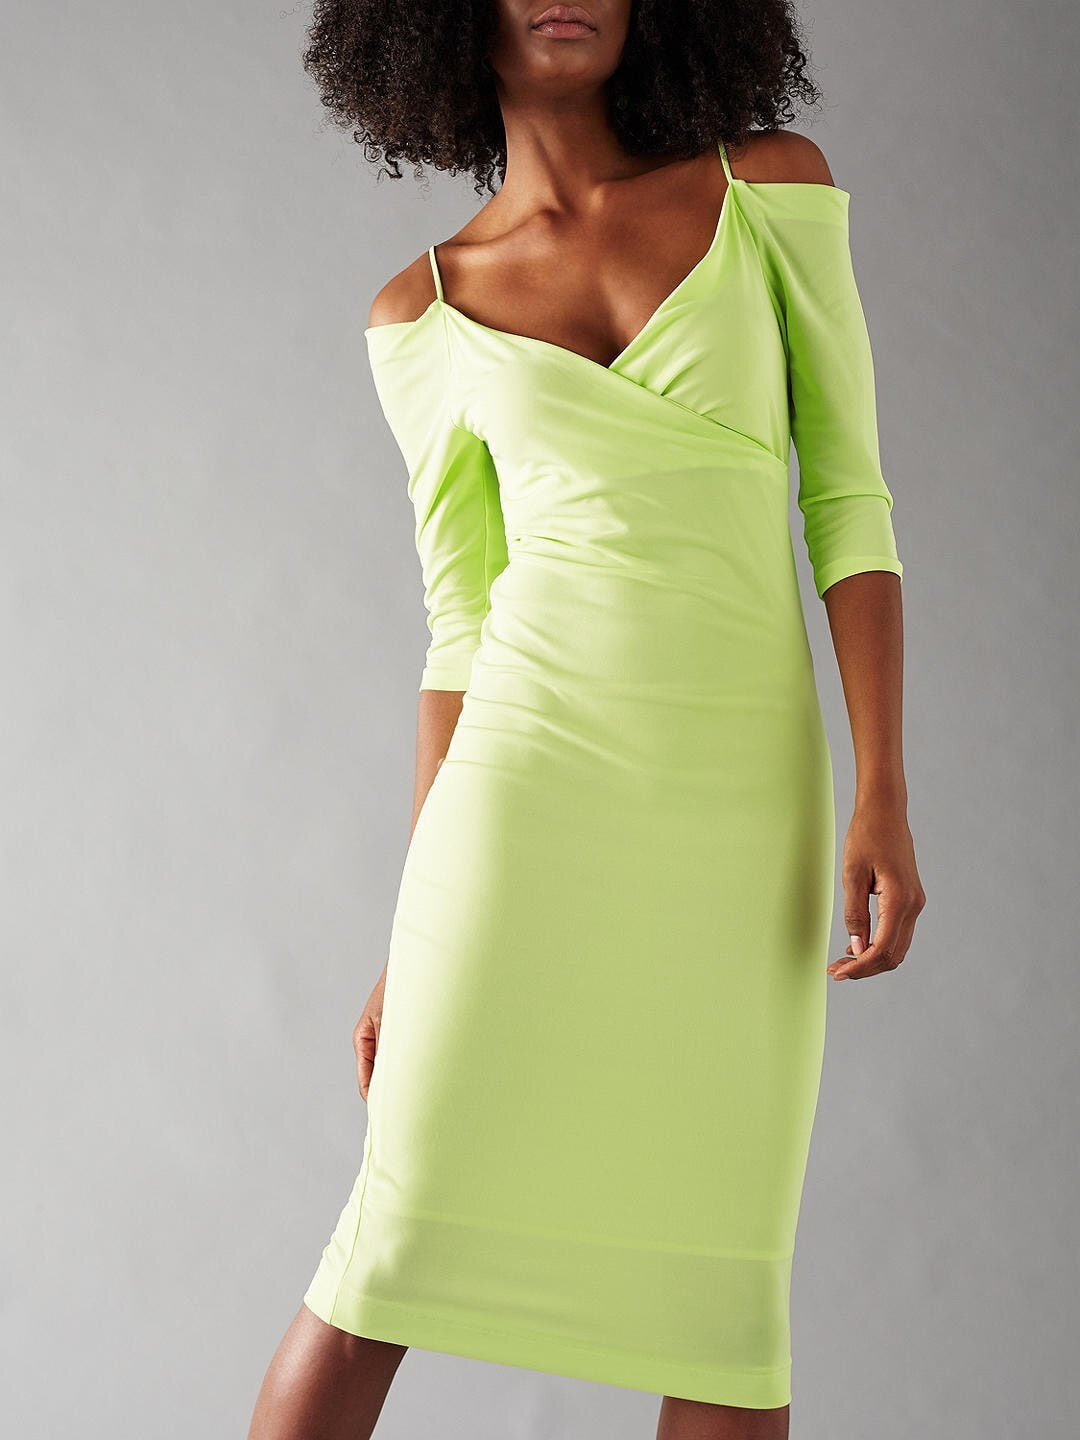 St Studio Womens Lime Off Shoulder Strap Dress Size M UK 8 US 4 EU 36 RRP £99 Timeless Fashions